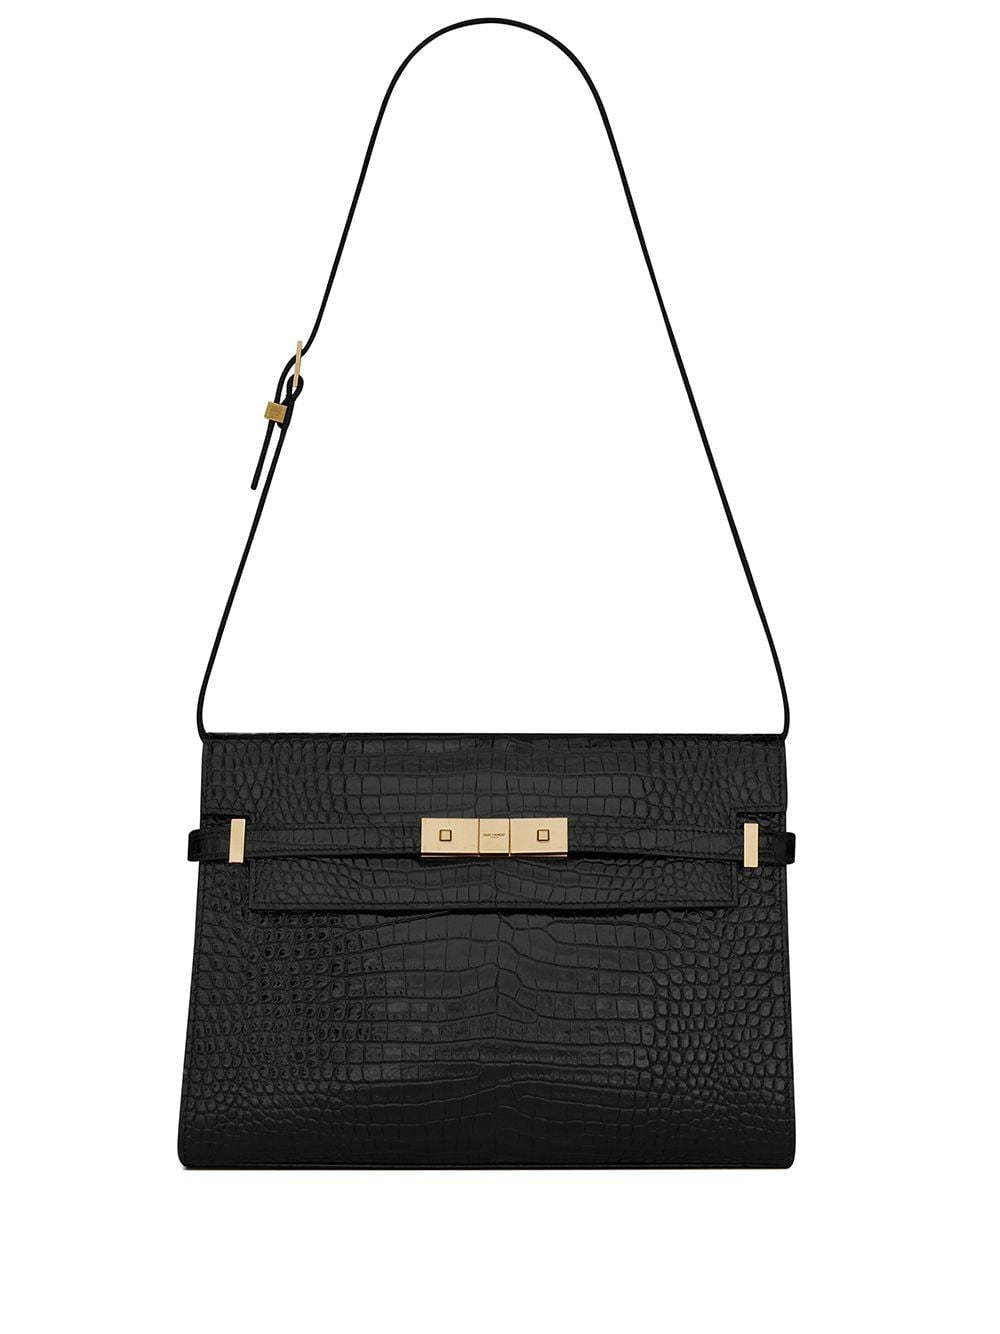 SAINT LAURENT Croc-Embossed Leather Handbag for Sophisticated Women